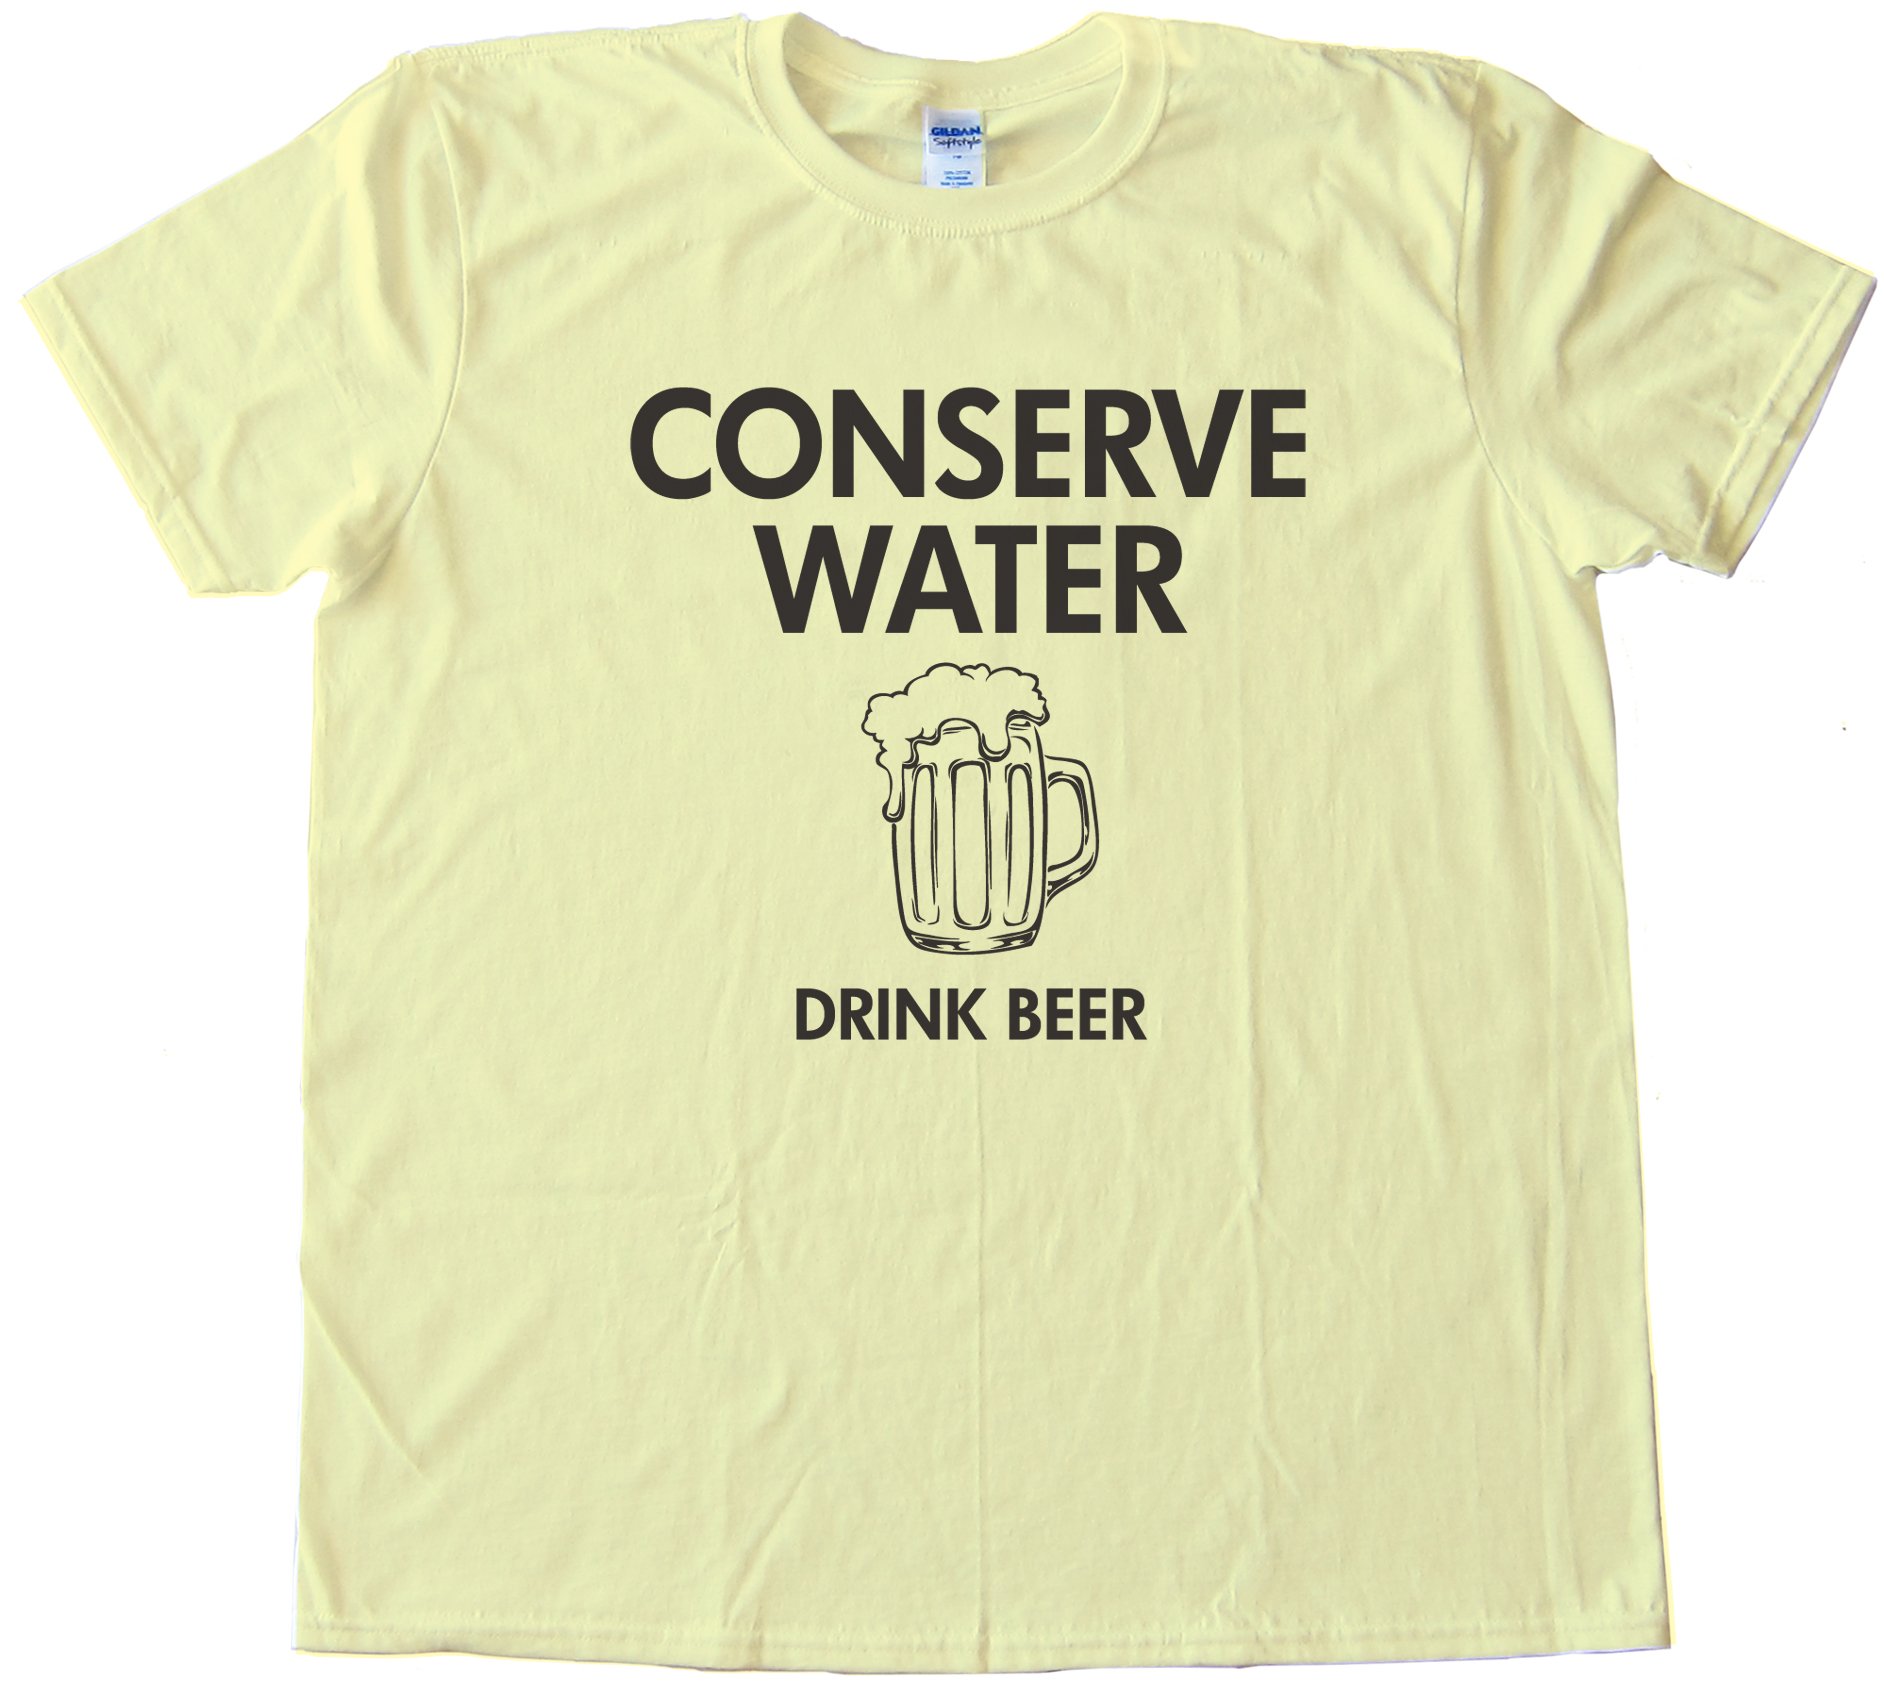 Conserve Water Drink Beer - Tee Shirt